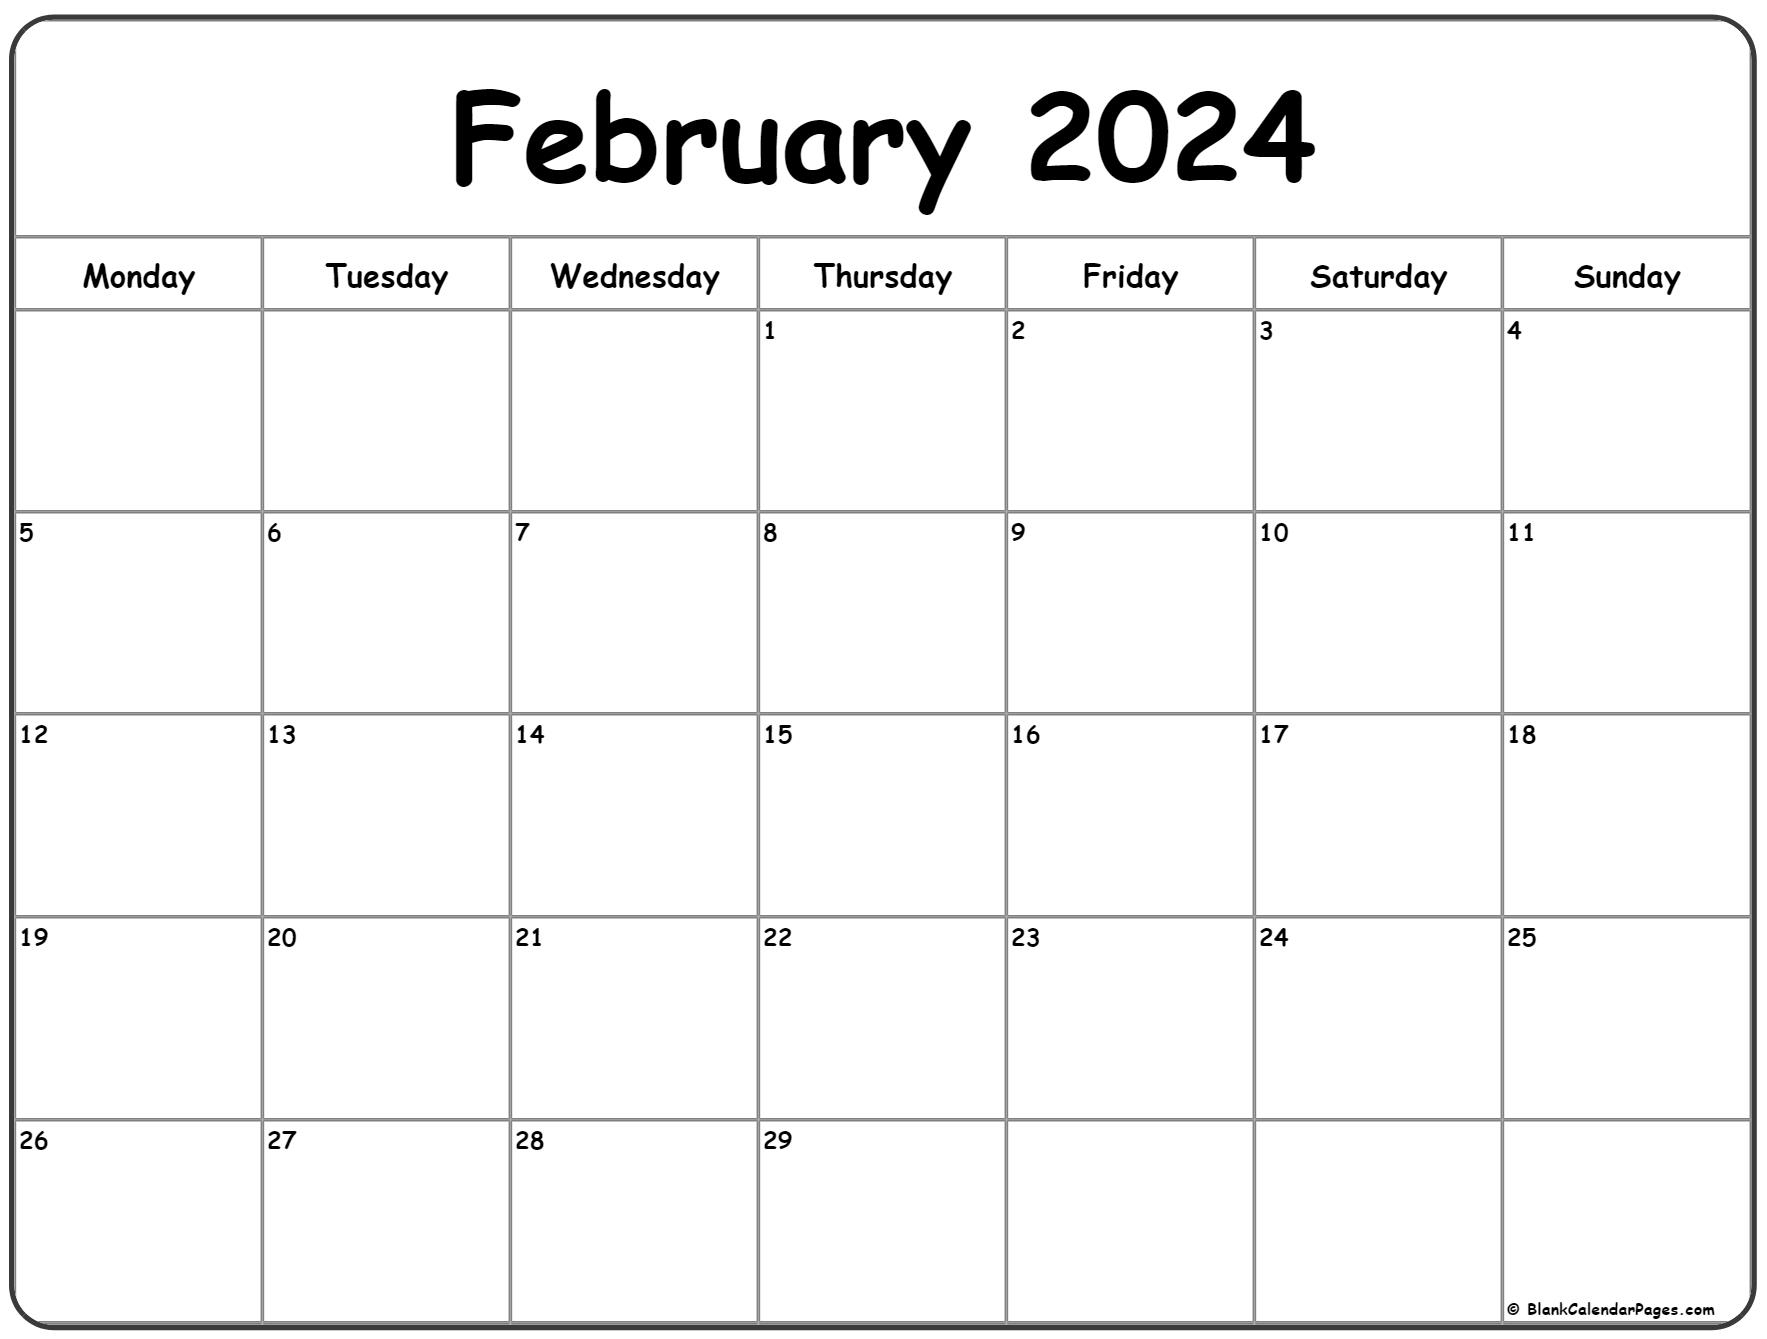 February 2024 Monday Calendar | Monday To Sunday for Feb 2024 Calendar Printable